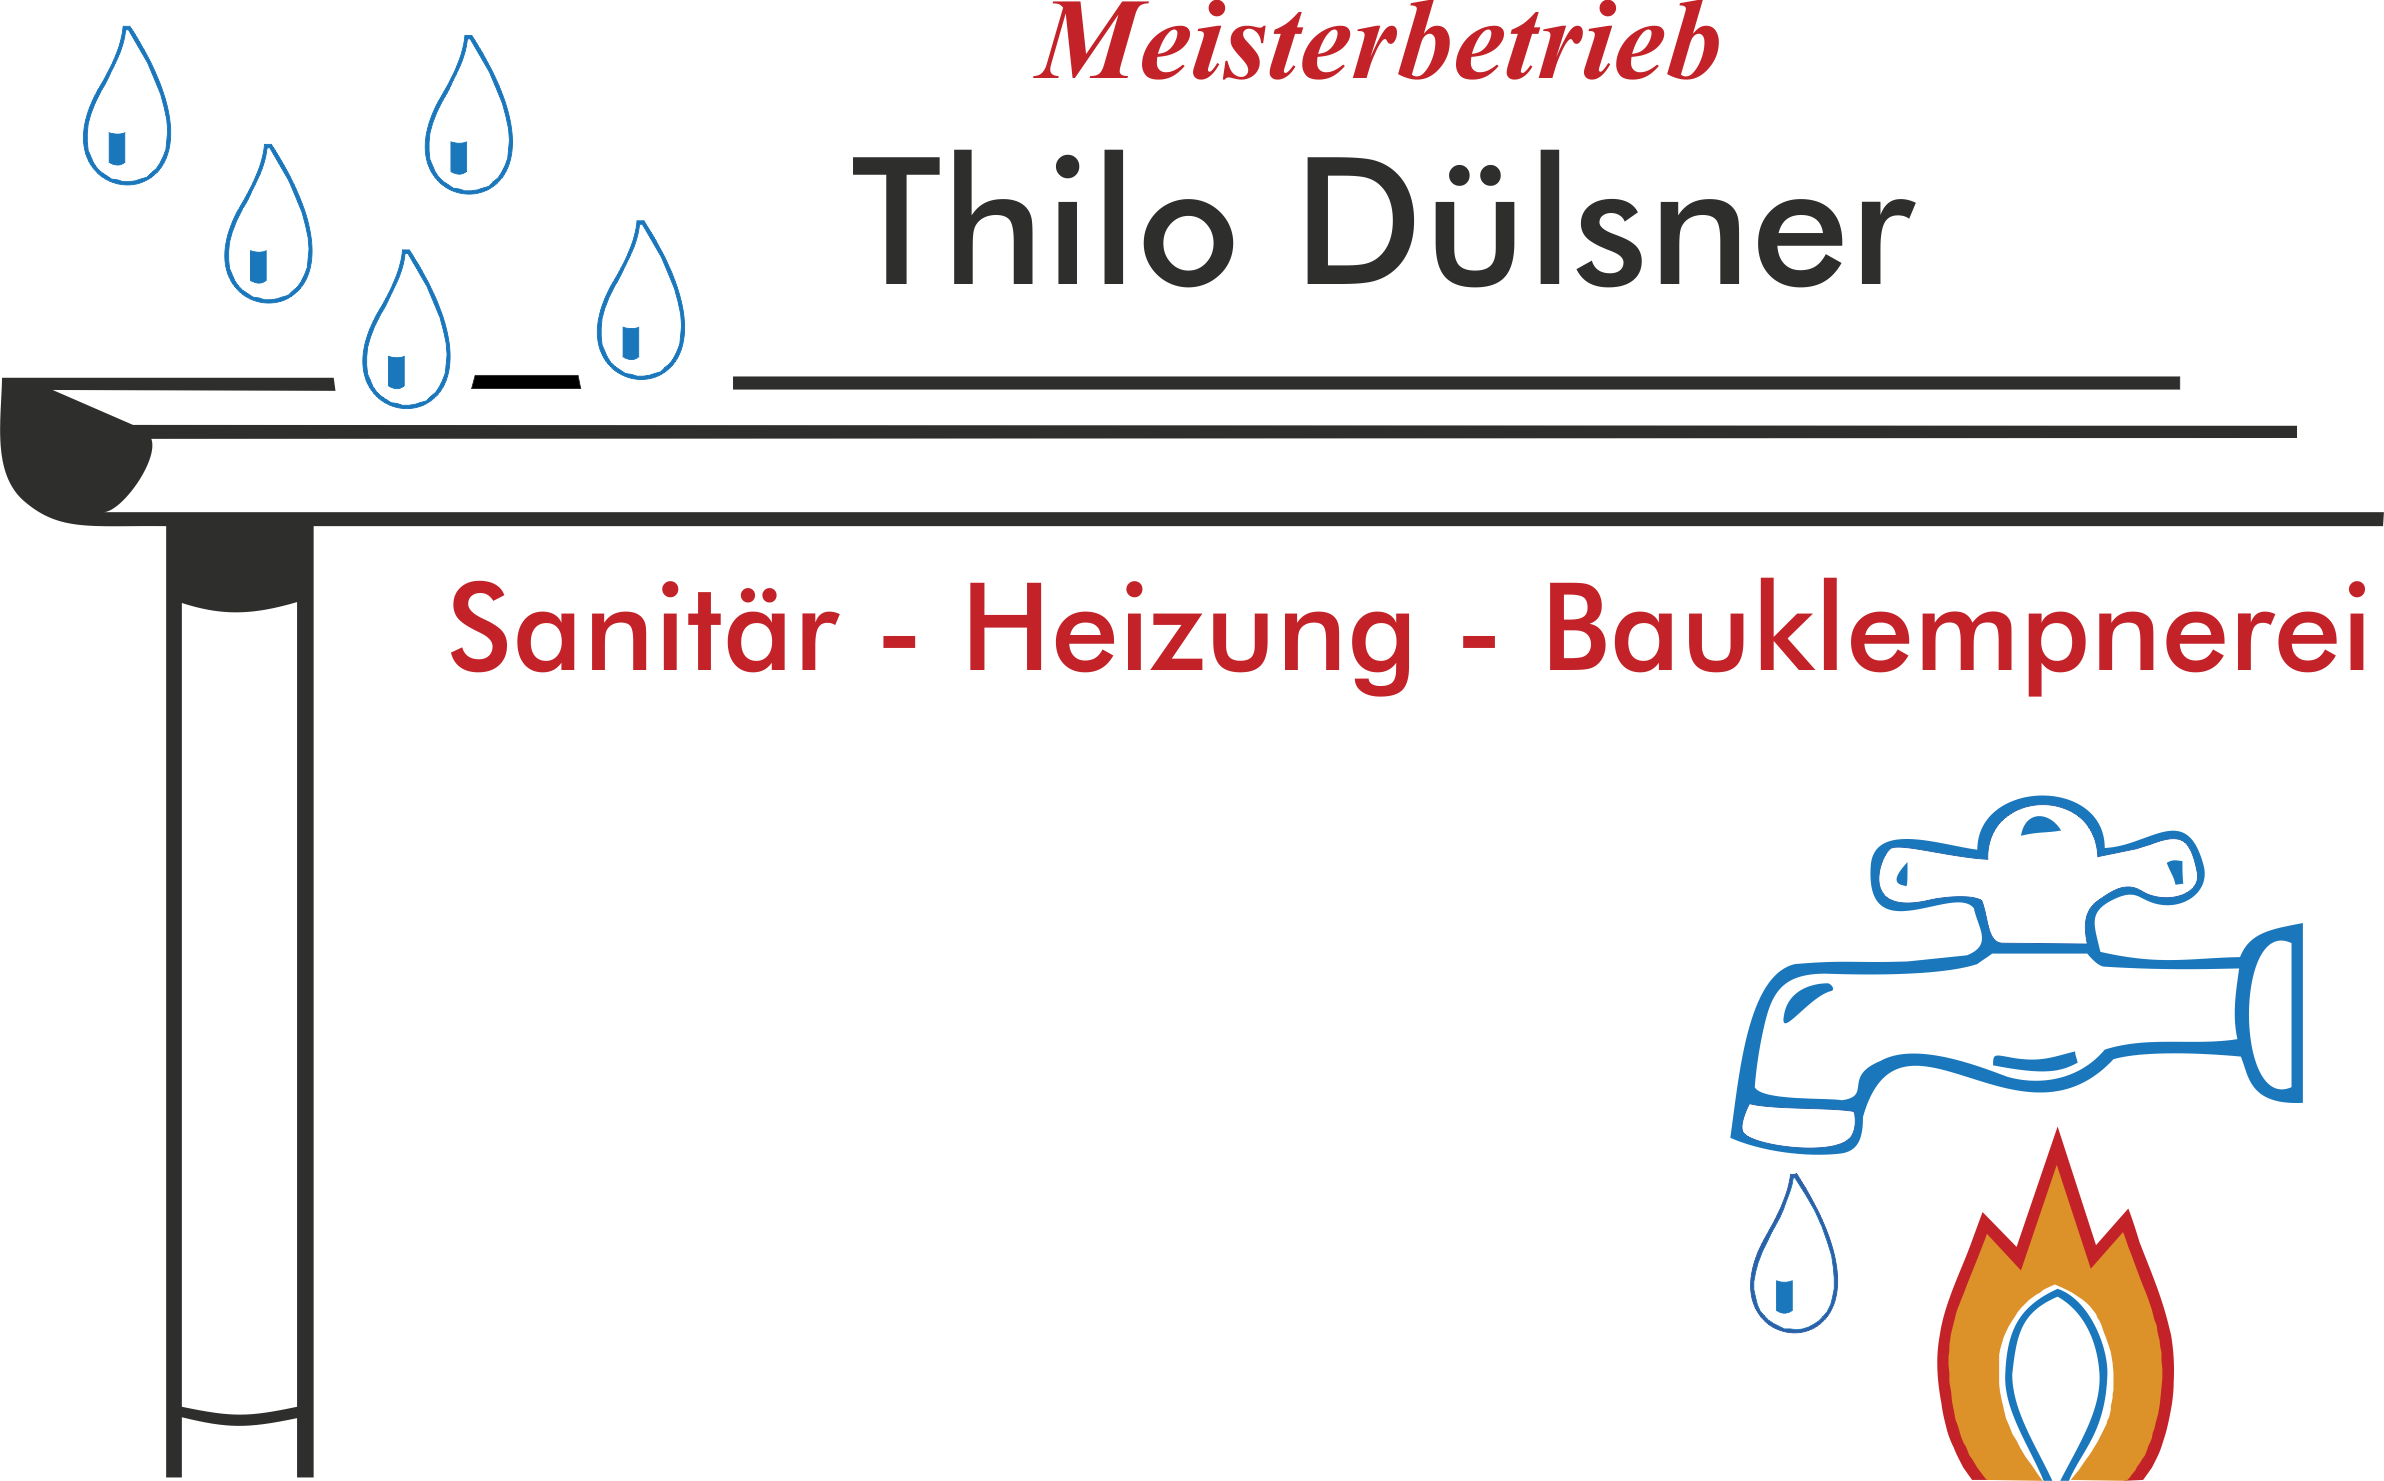 Thilo Dülsner